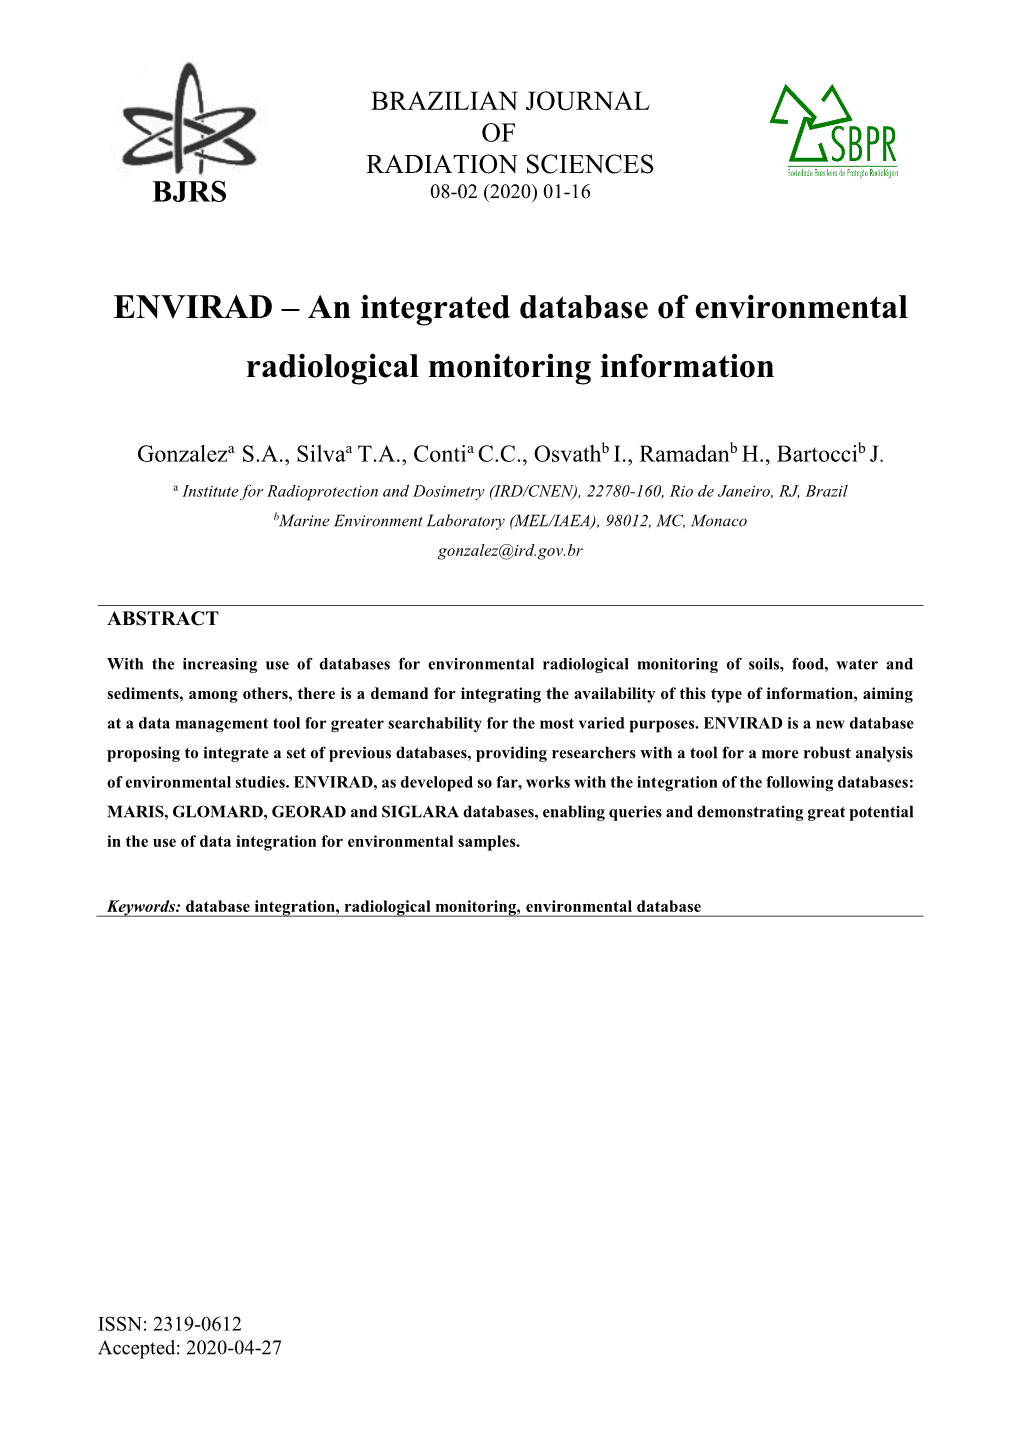 ENVIRAD – an Integrated Database of Environmental Radiological Monitoring Information